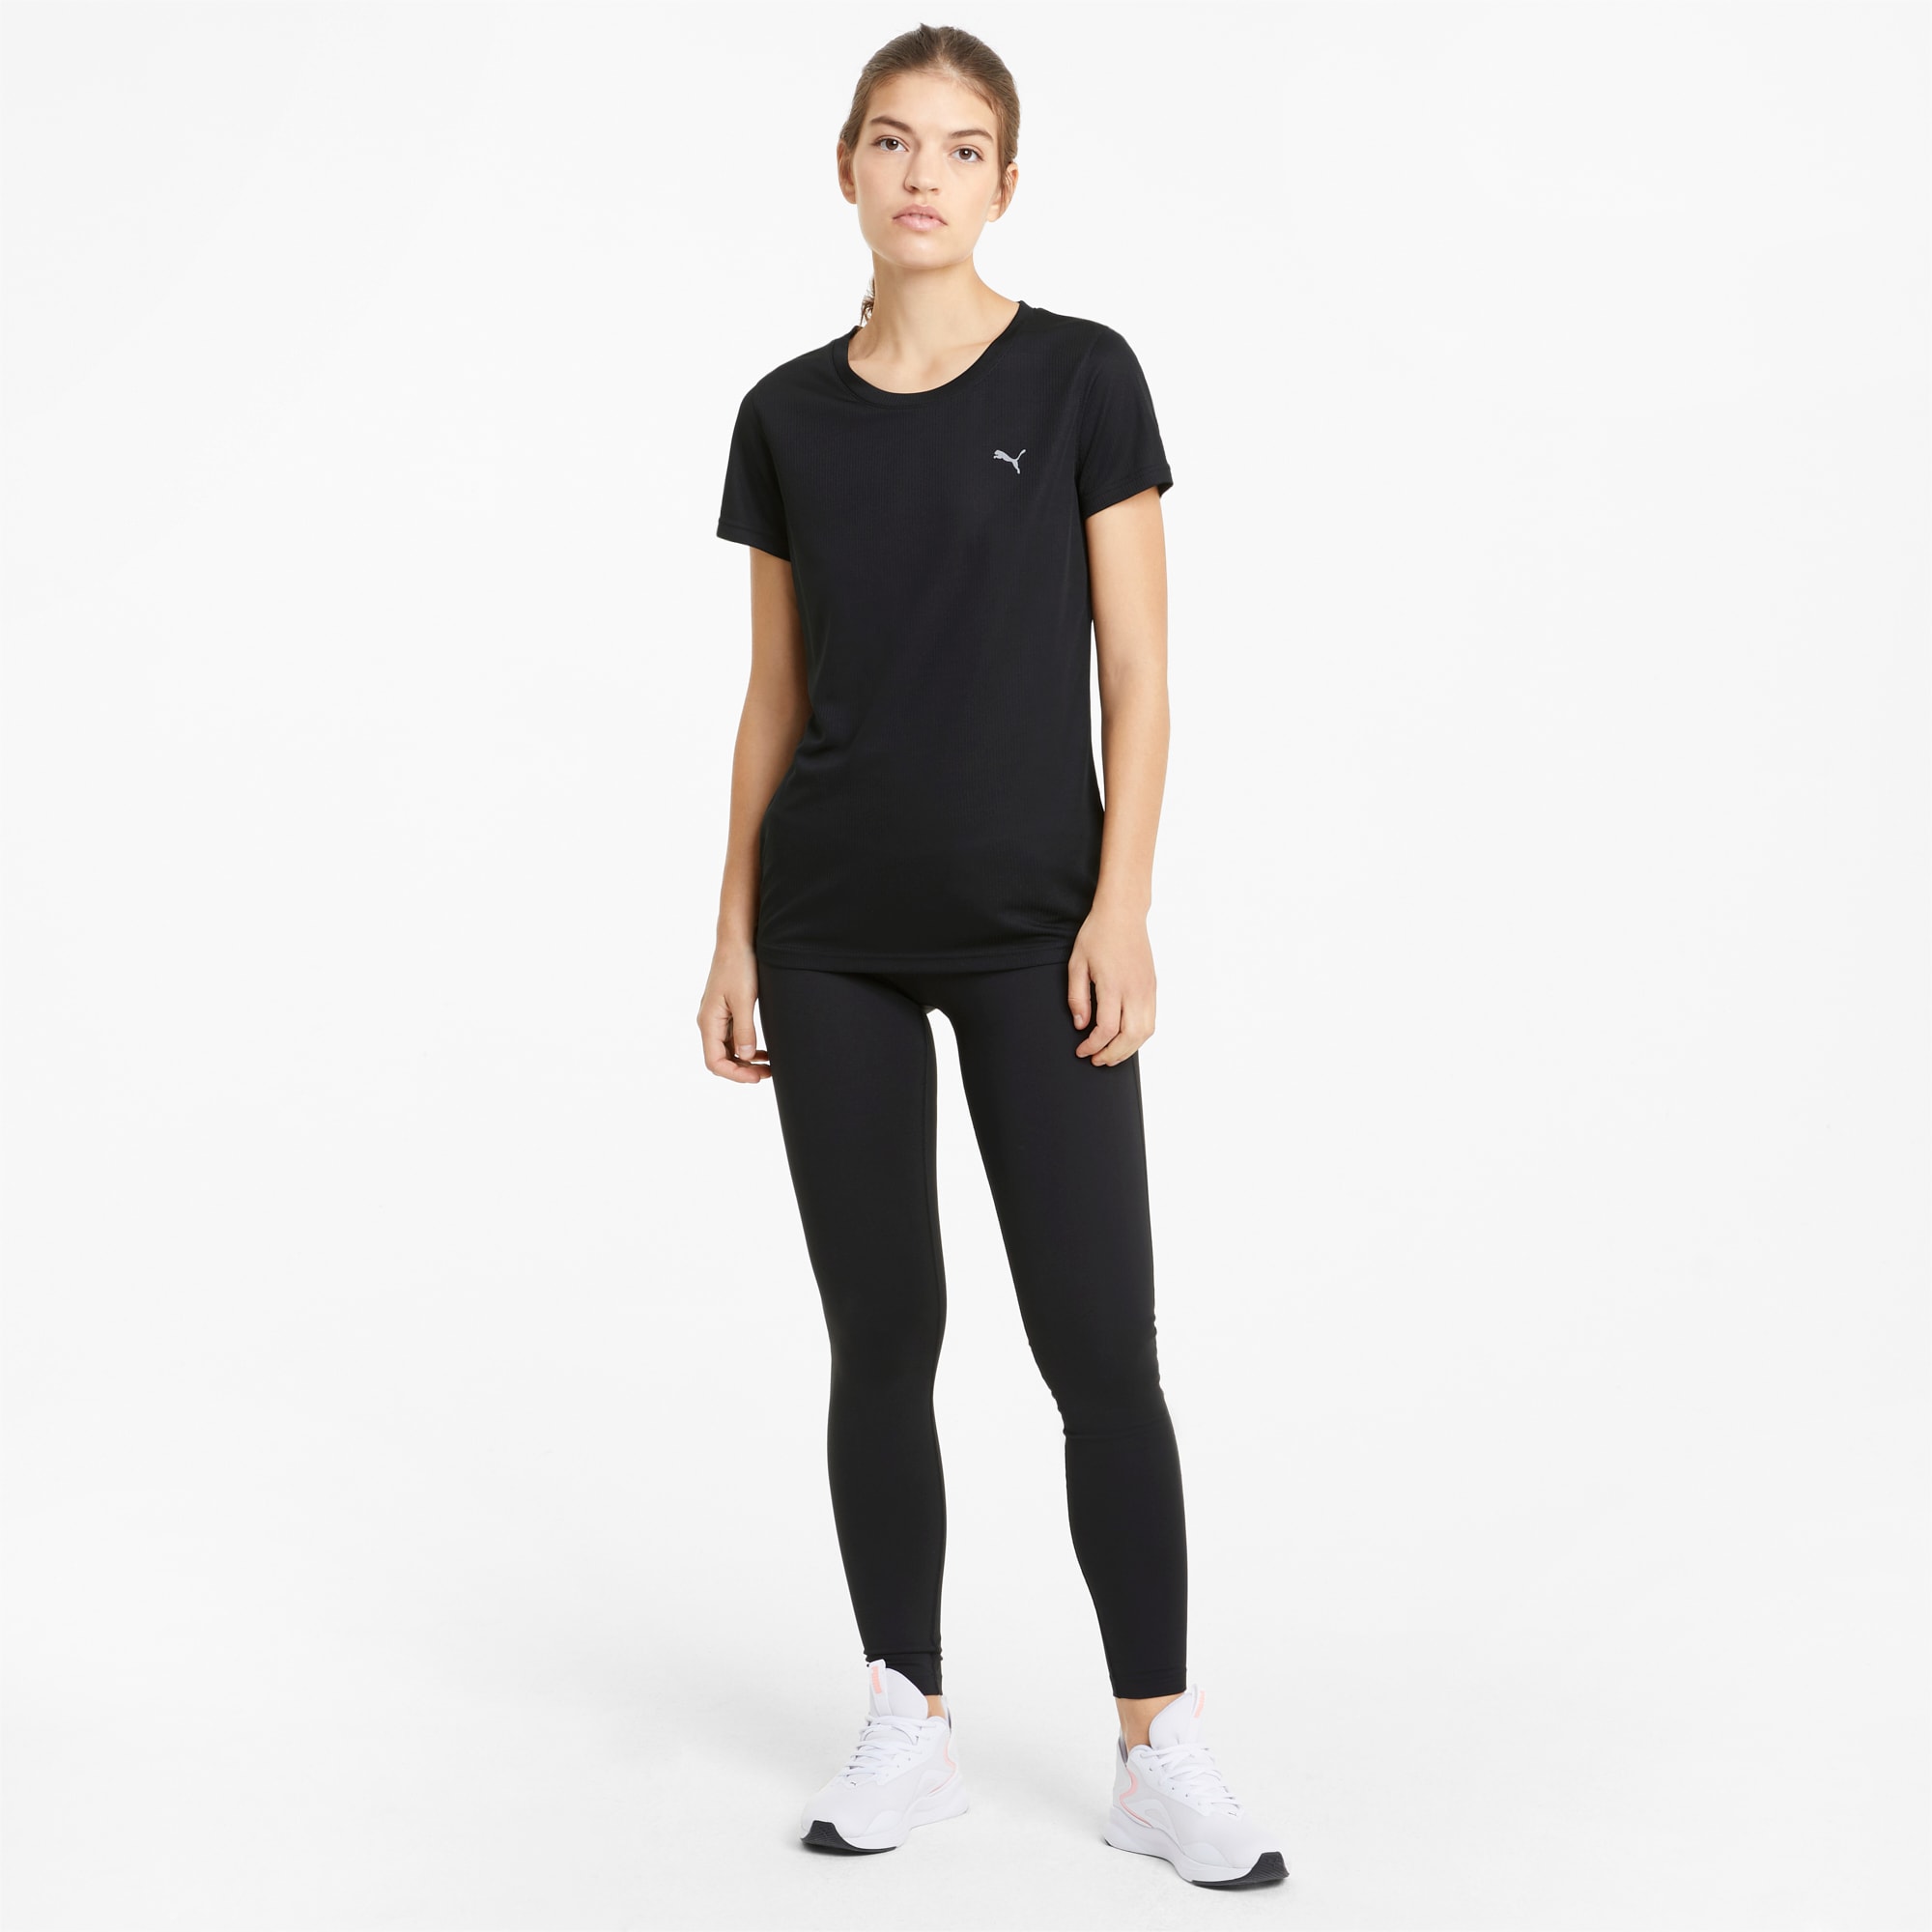 PUMA Performance Women's Training T-Shirt, Black, Size L, Clothing